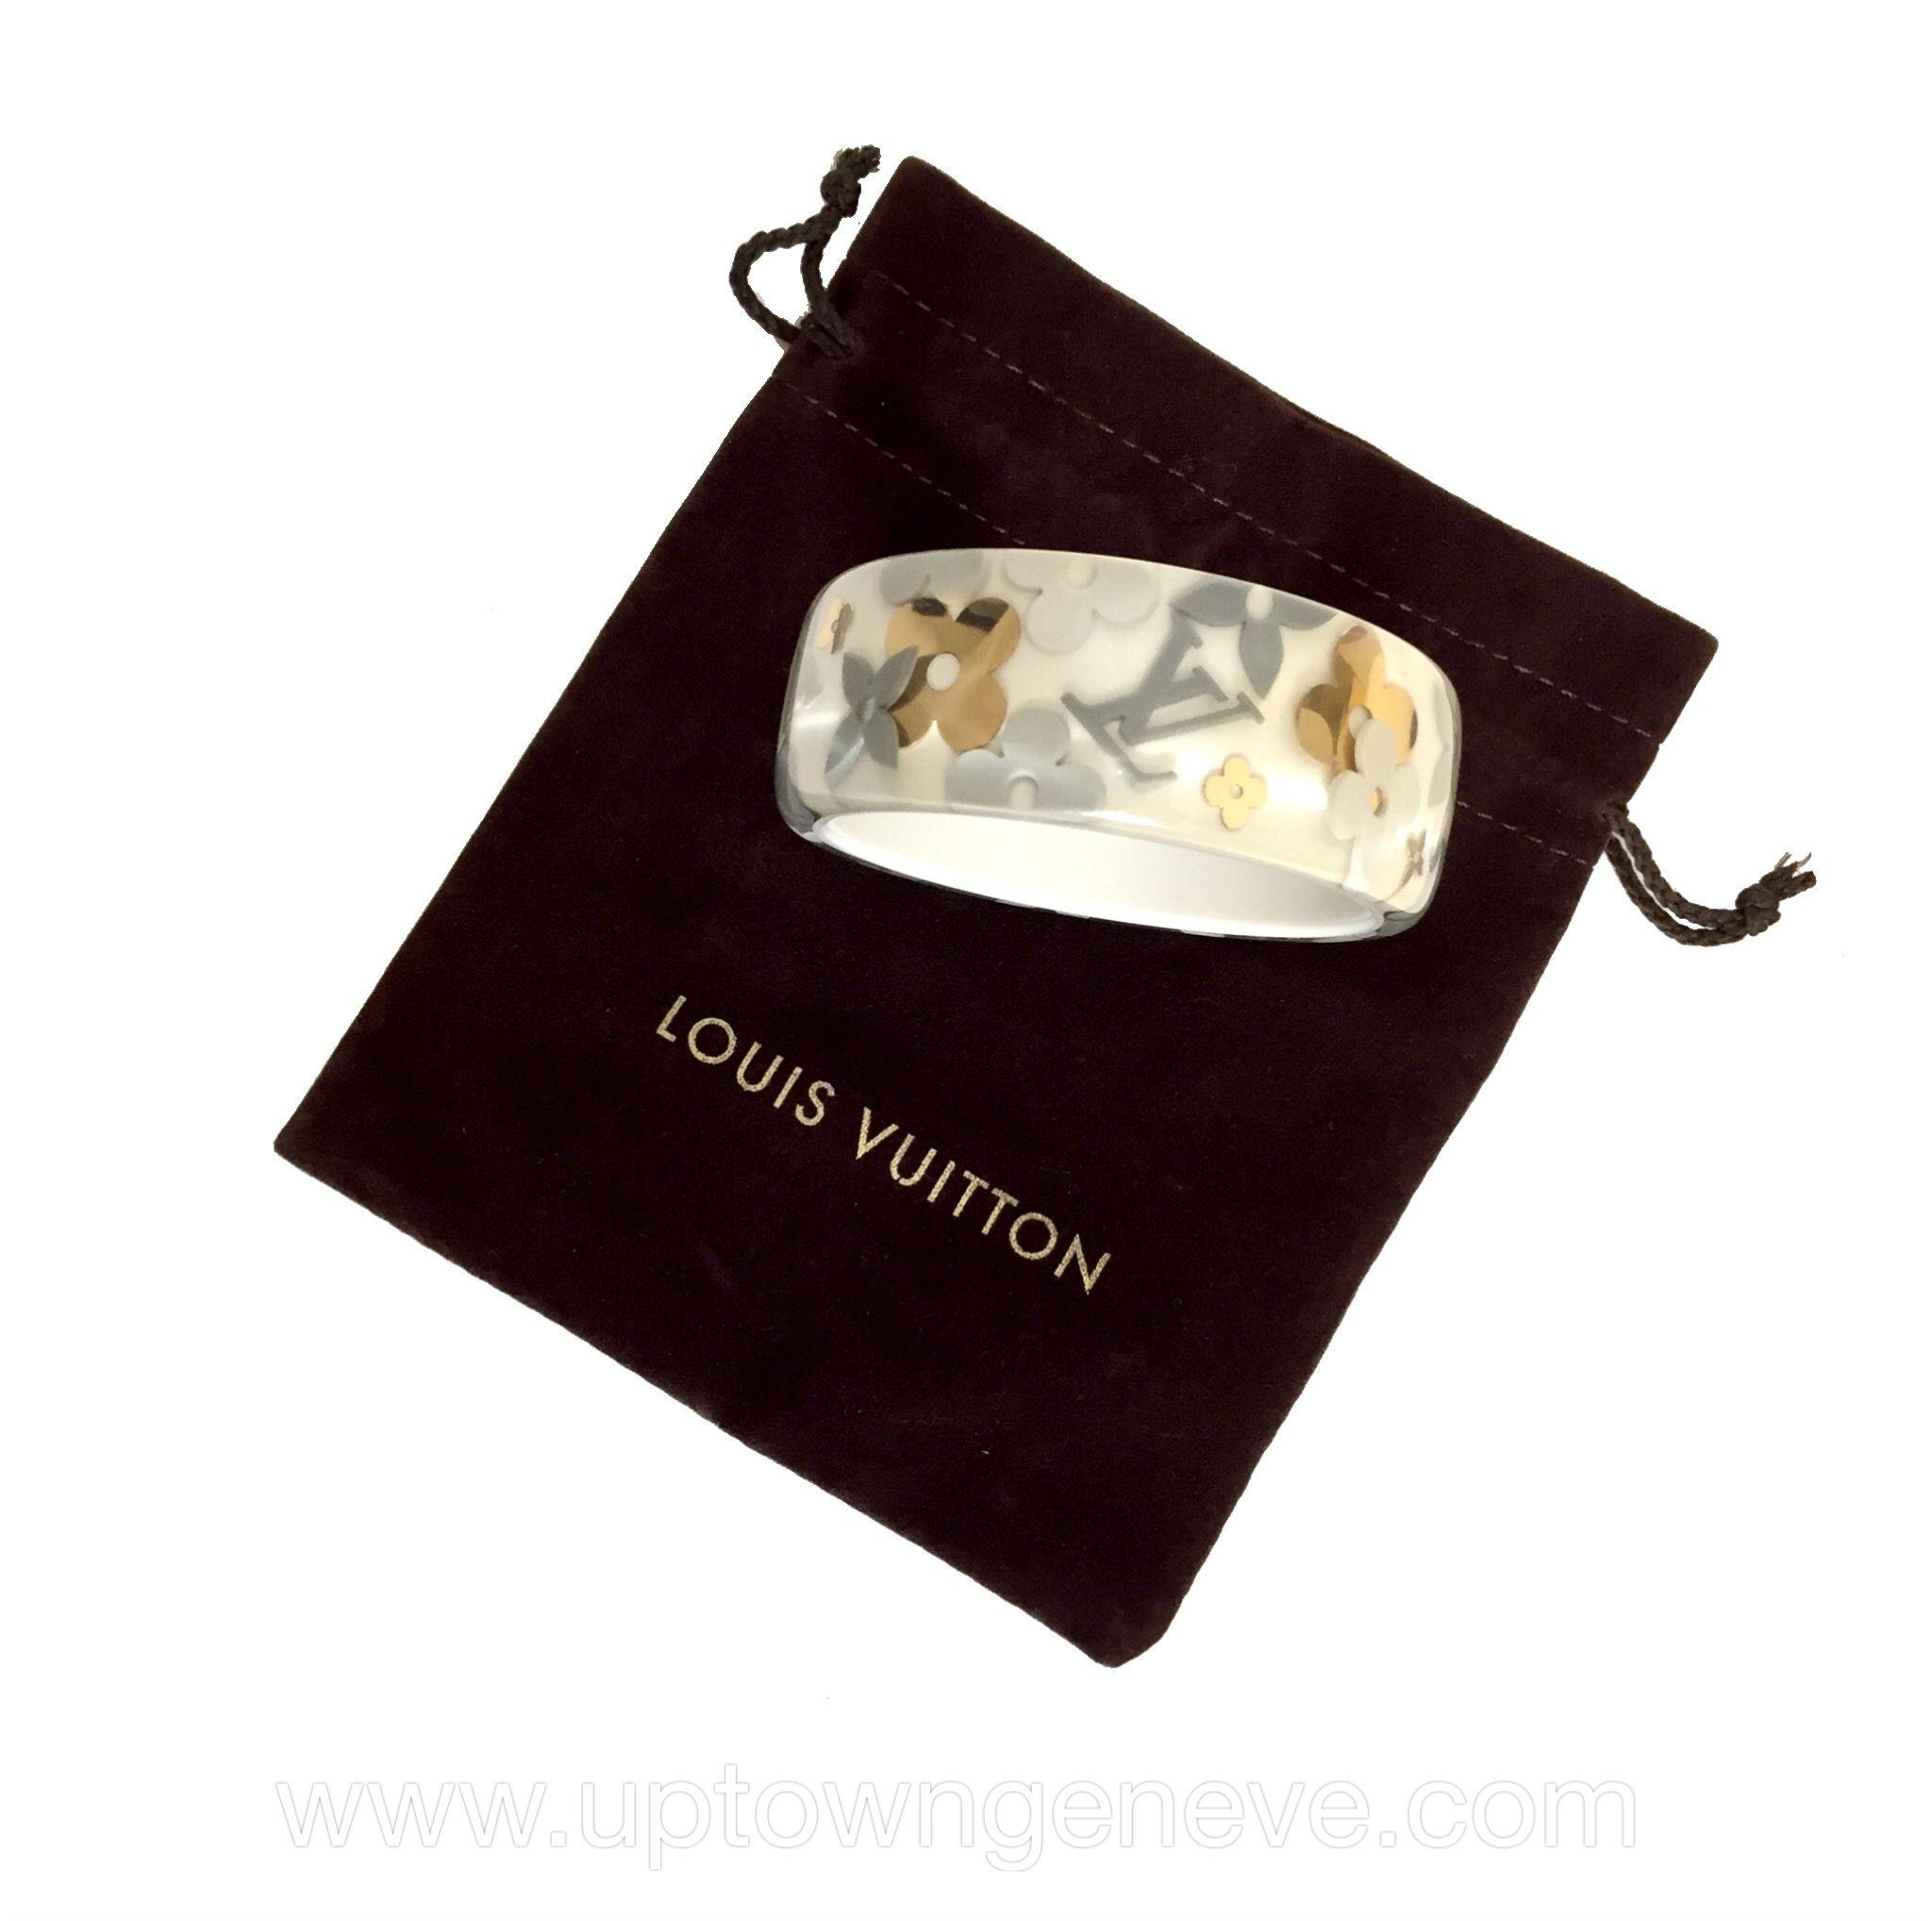 Gold LV Logo - Louis Vuitton grey resin bracelet with gold LV logos